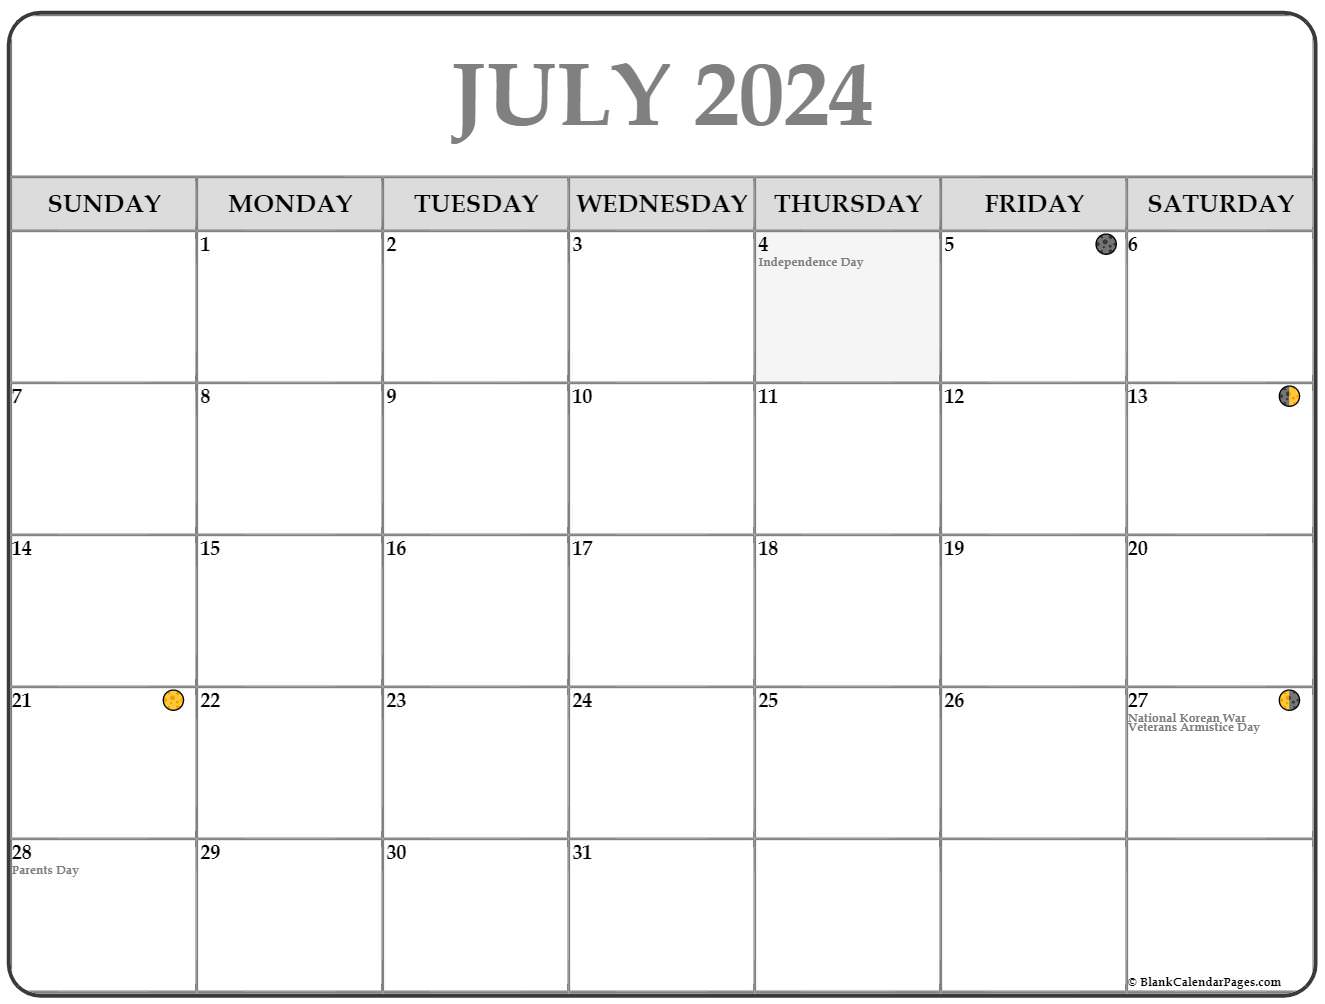 July 2024 Lunar Calendar | Moon Phase Calendar